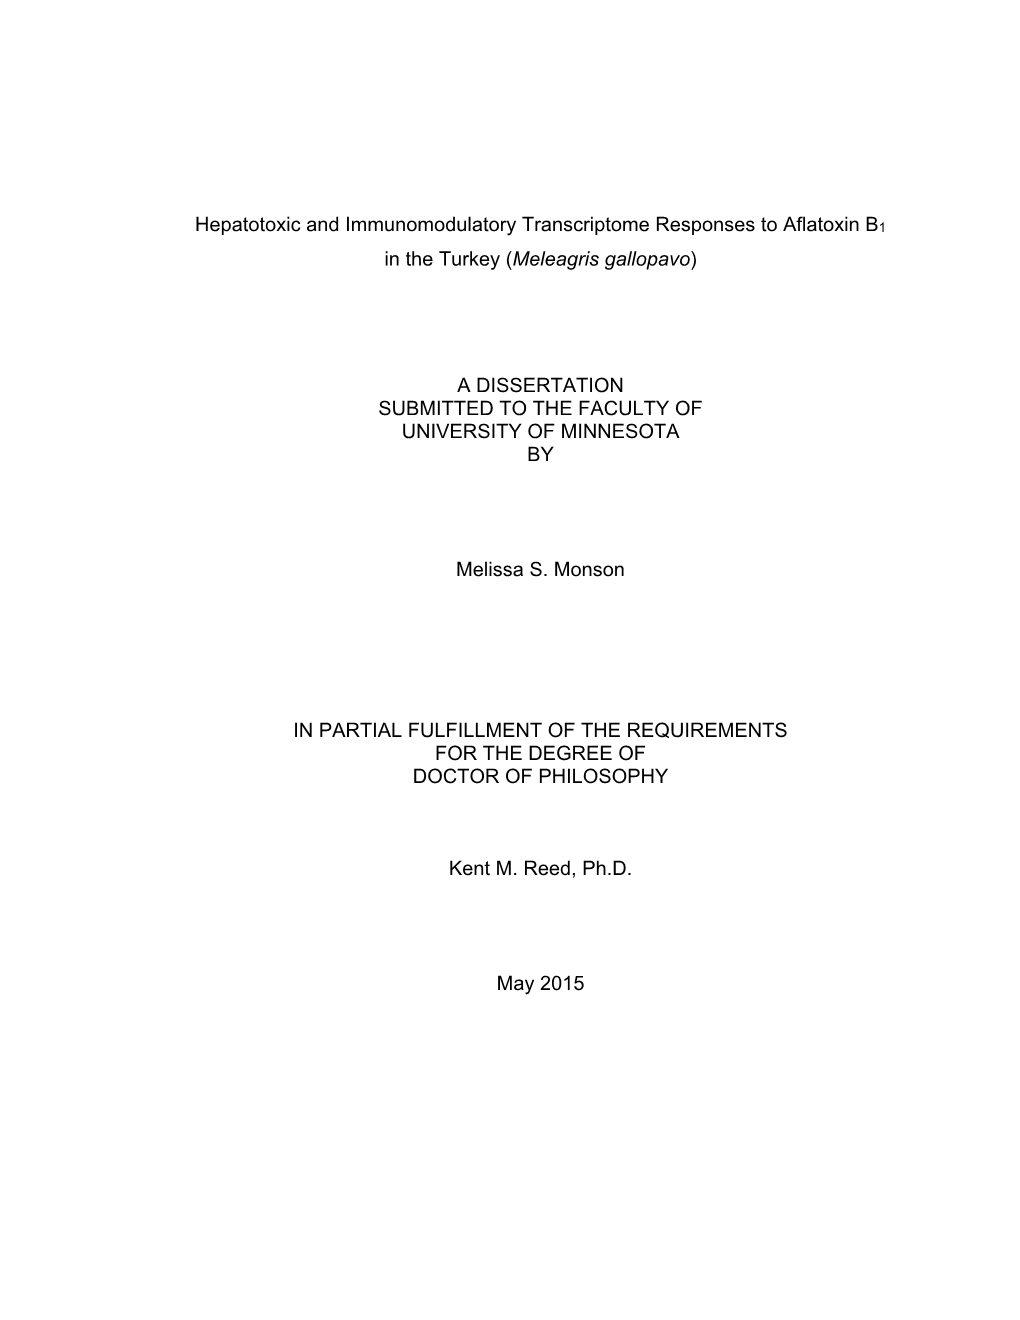 Hepatotoxic and Immunomodulatory Transcriptome Responses to Aflatoxin B1 in the Turkey (Meleagris Gallopavo)